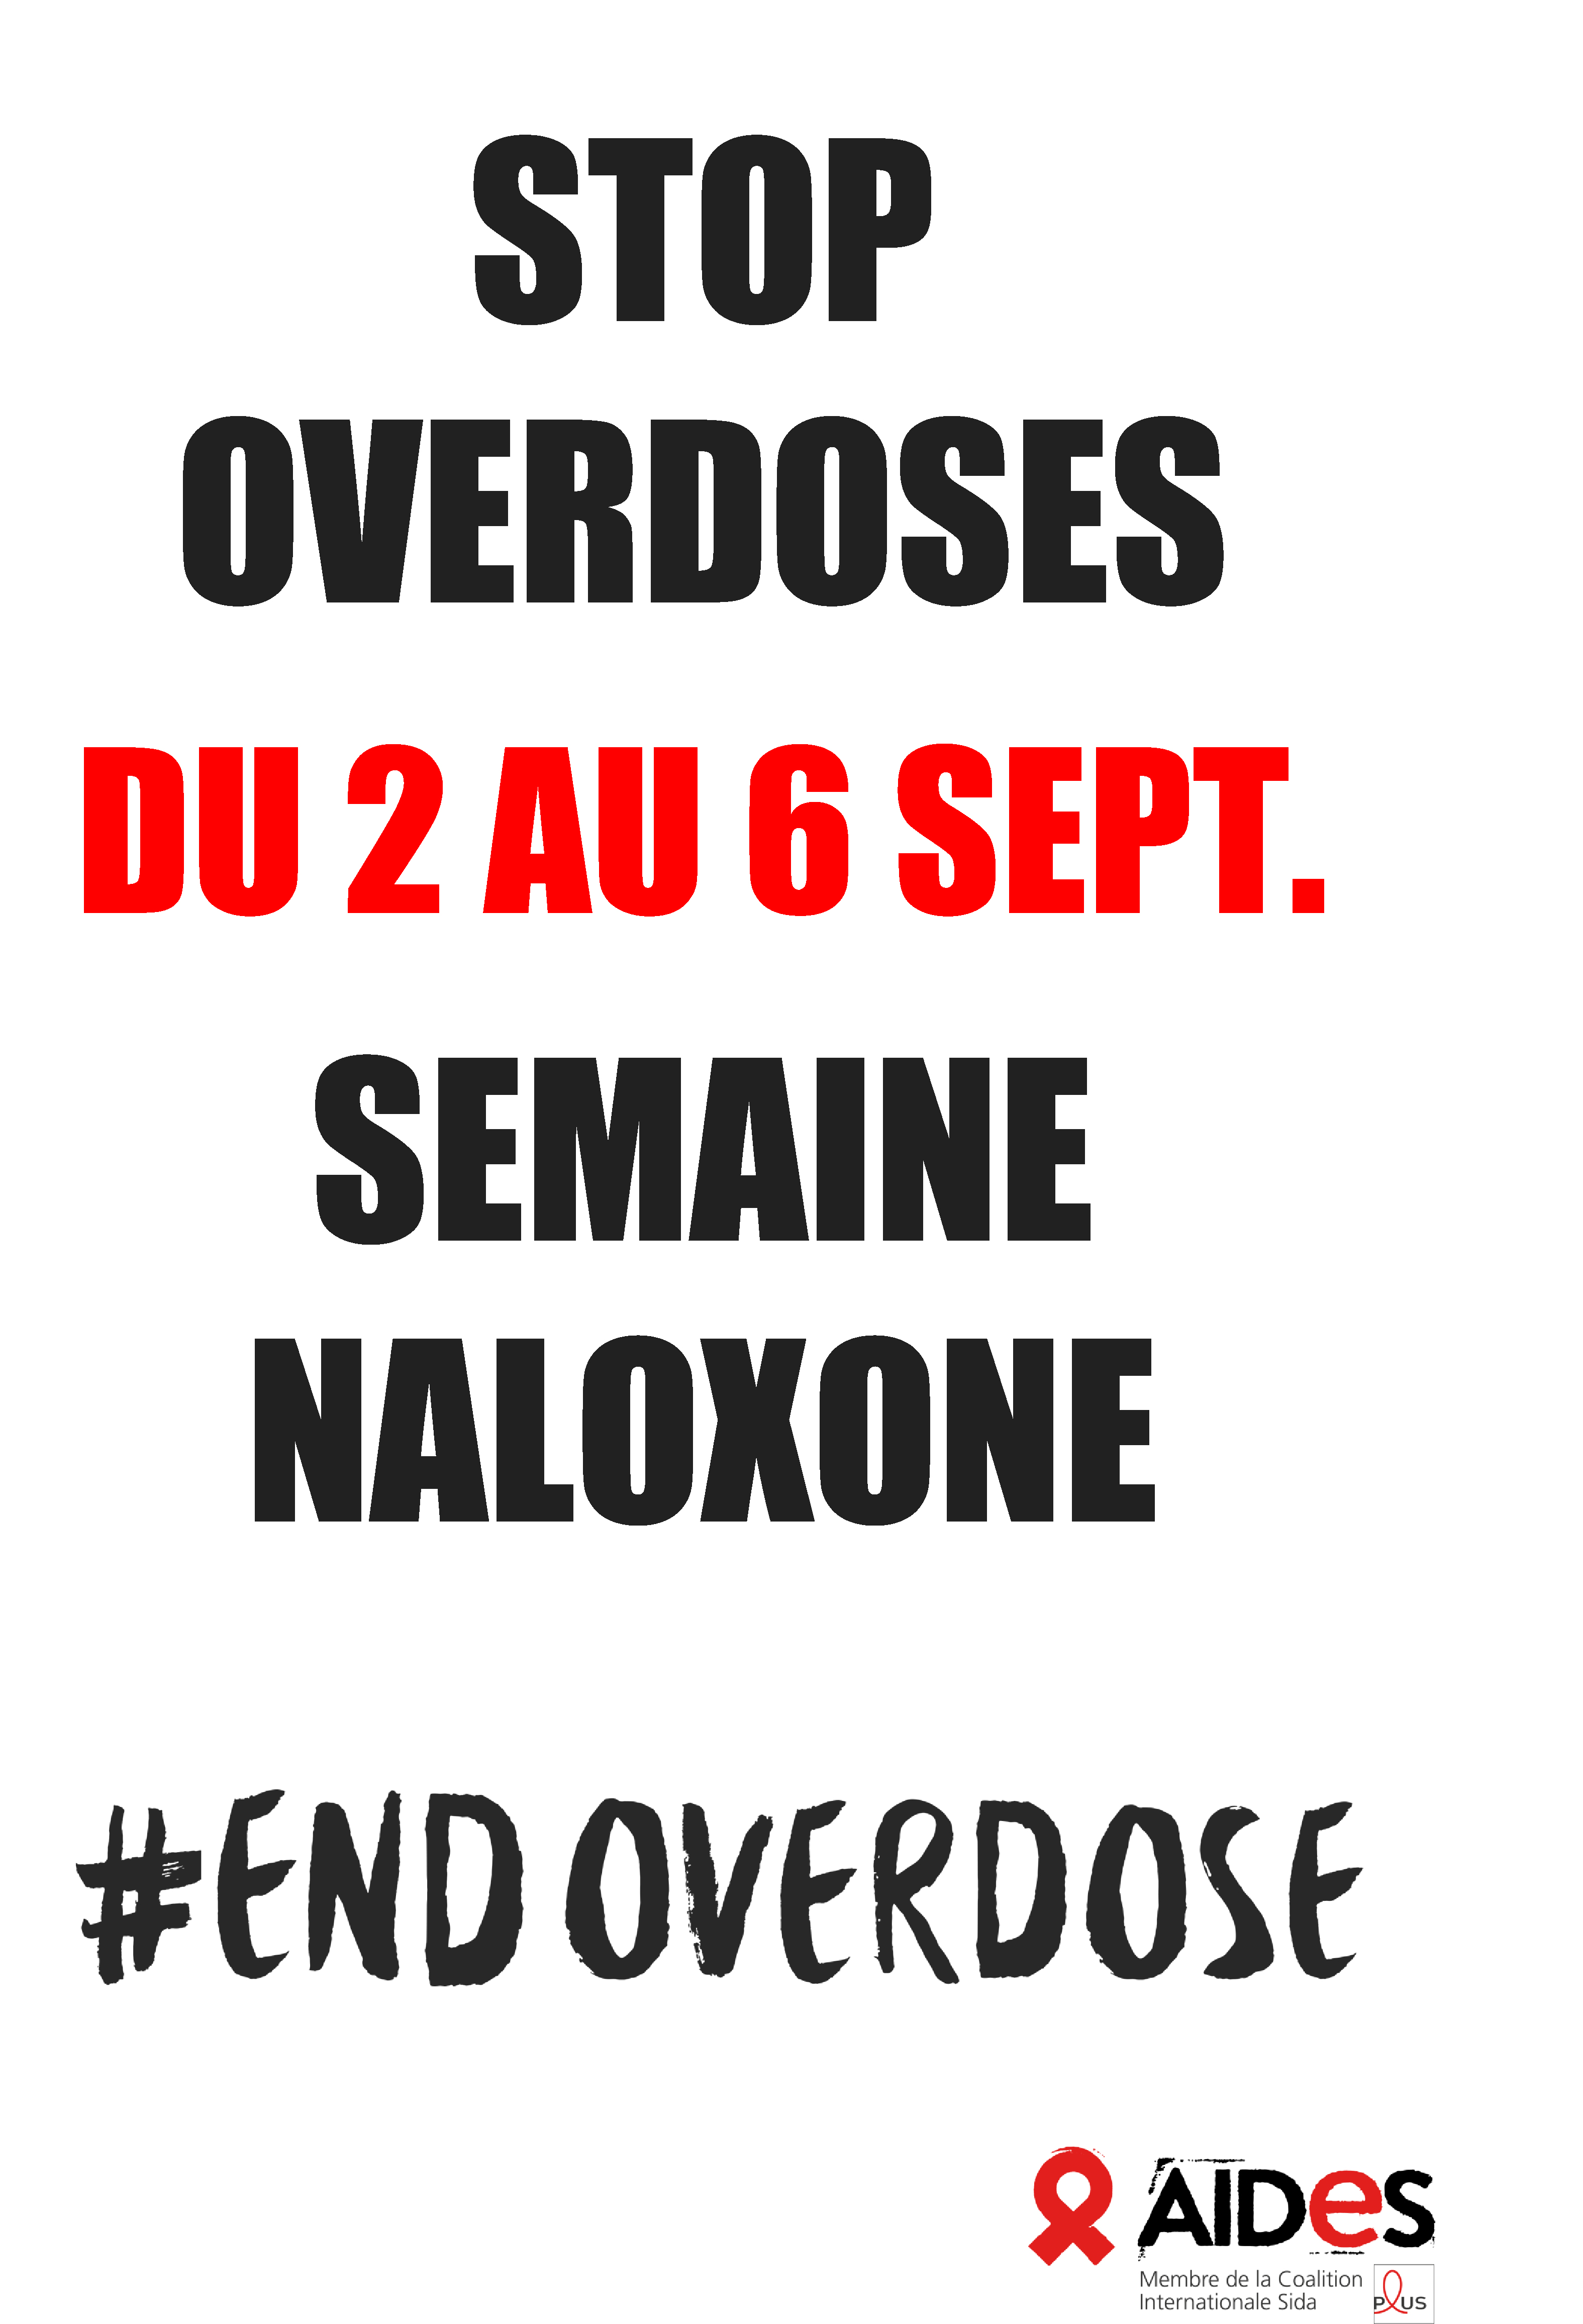 poster naloxone overdoses